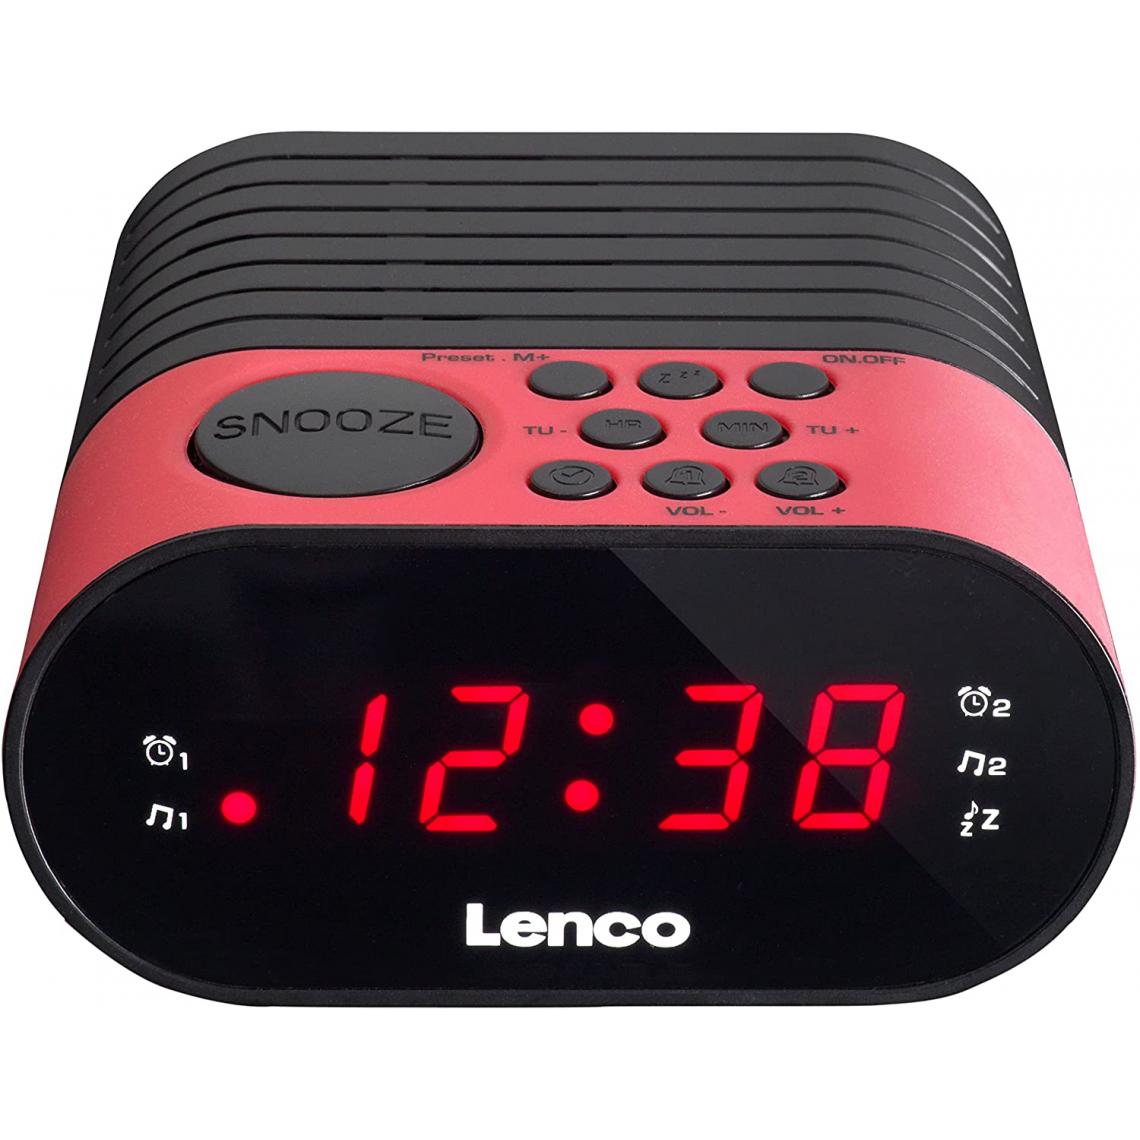 Lenco - radio réveil FM avec double alarme noir rose - Radio